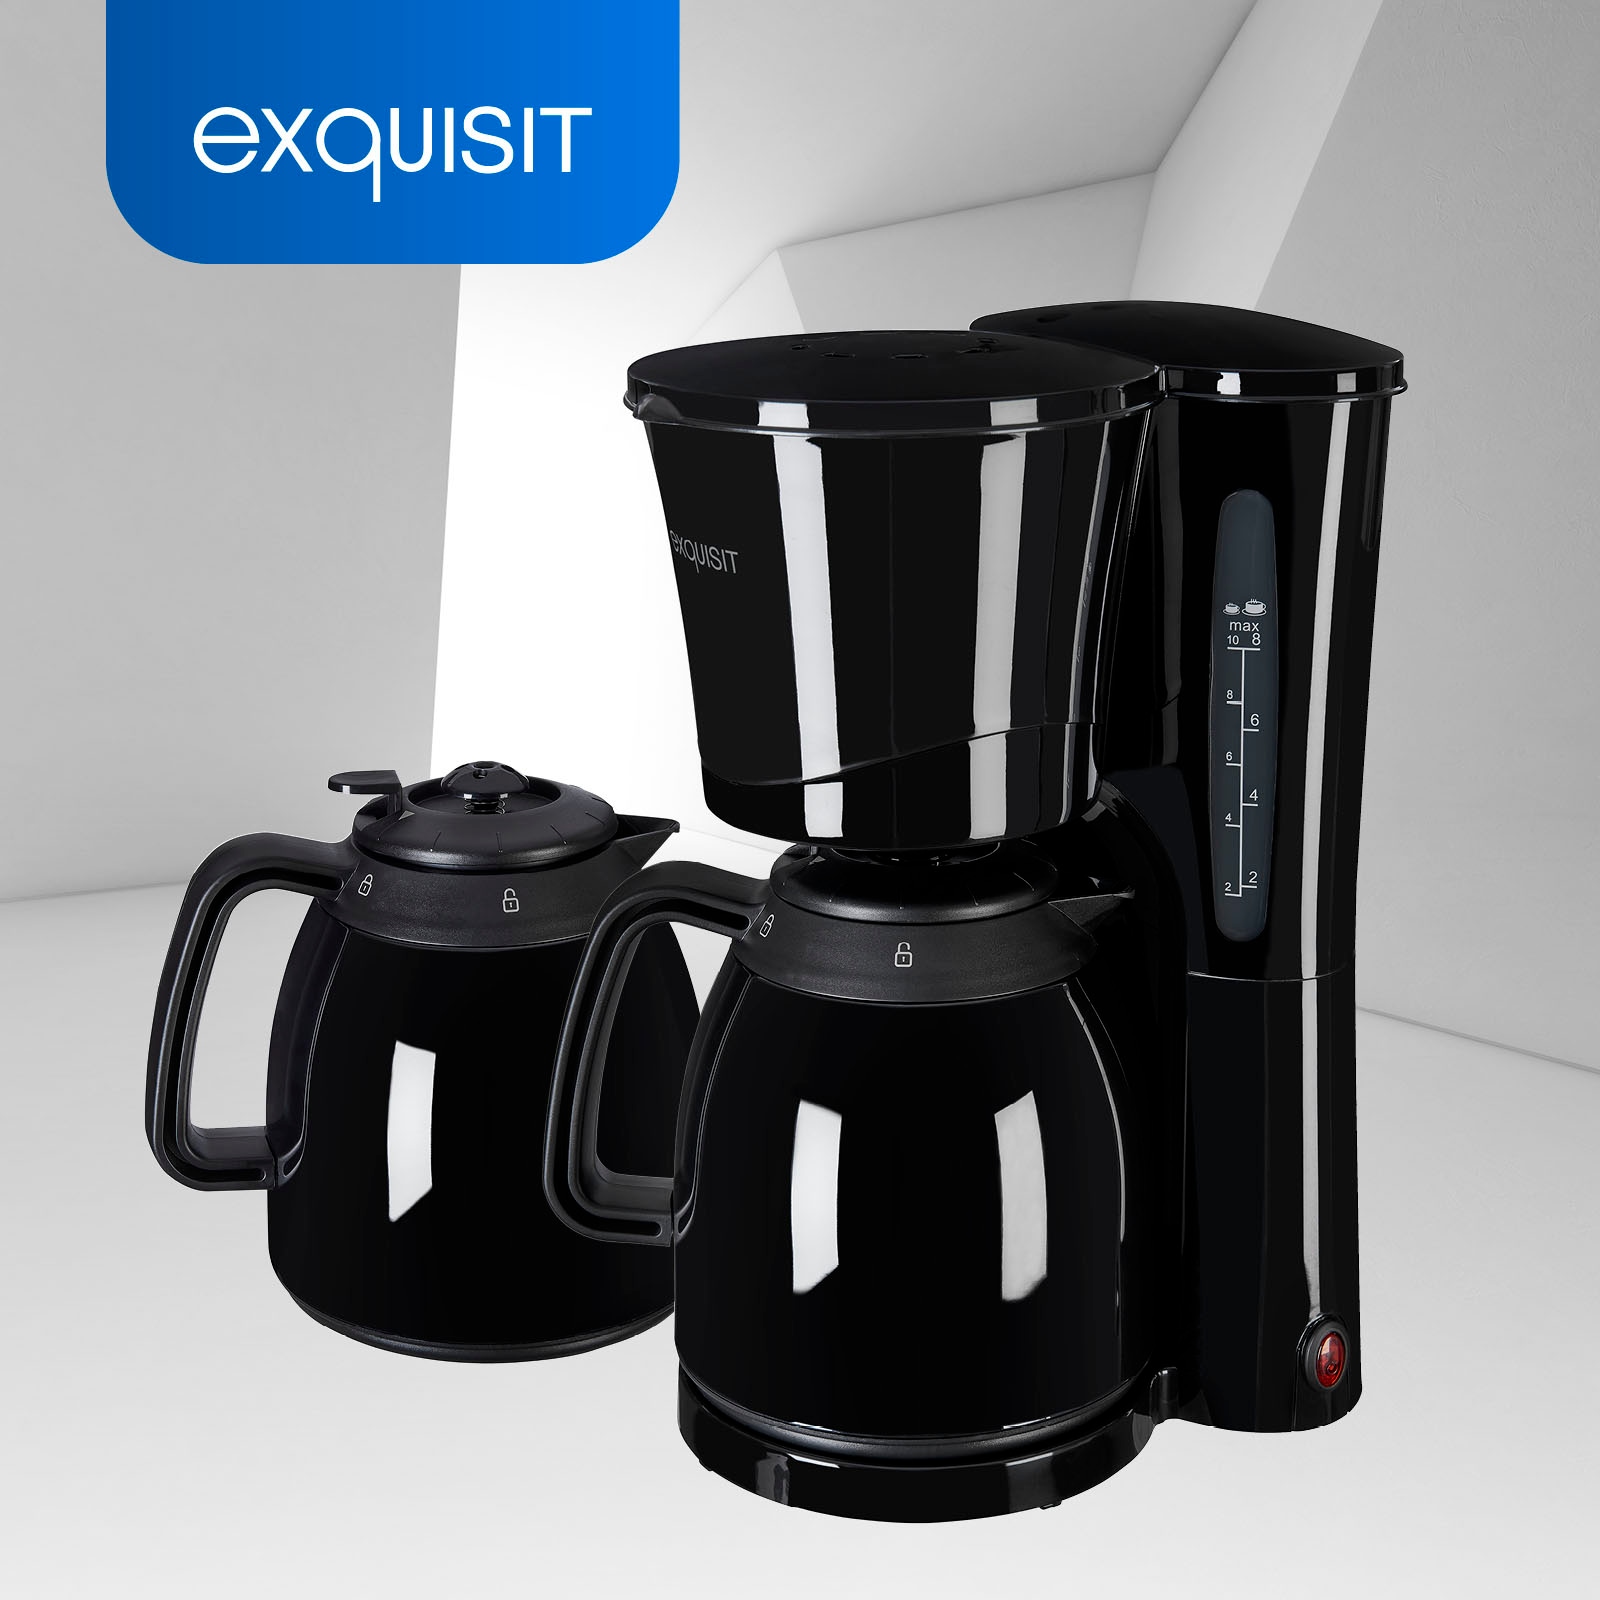 exquisit Filterkaffeemaschine »KA 6502 sw«, 1 l Kaffeekanne, Papierfilter, 1x4, inkl. 2 Thermokannen